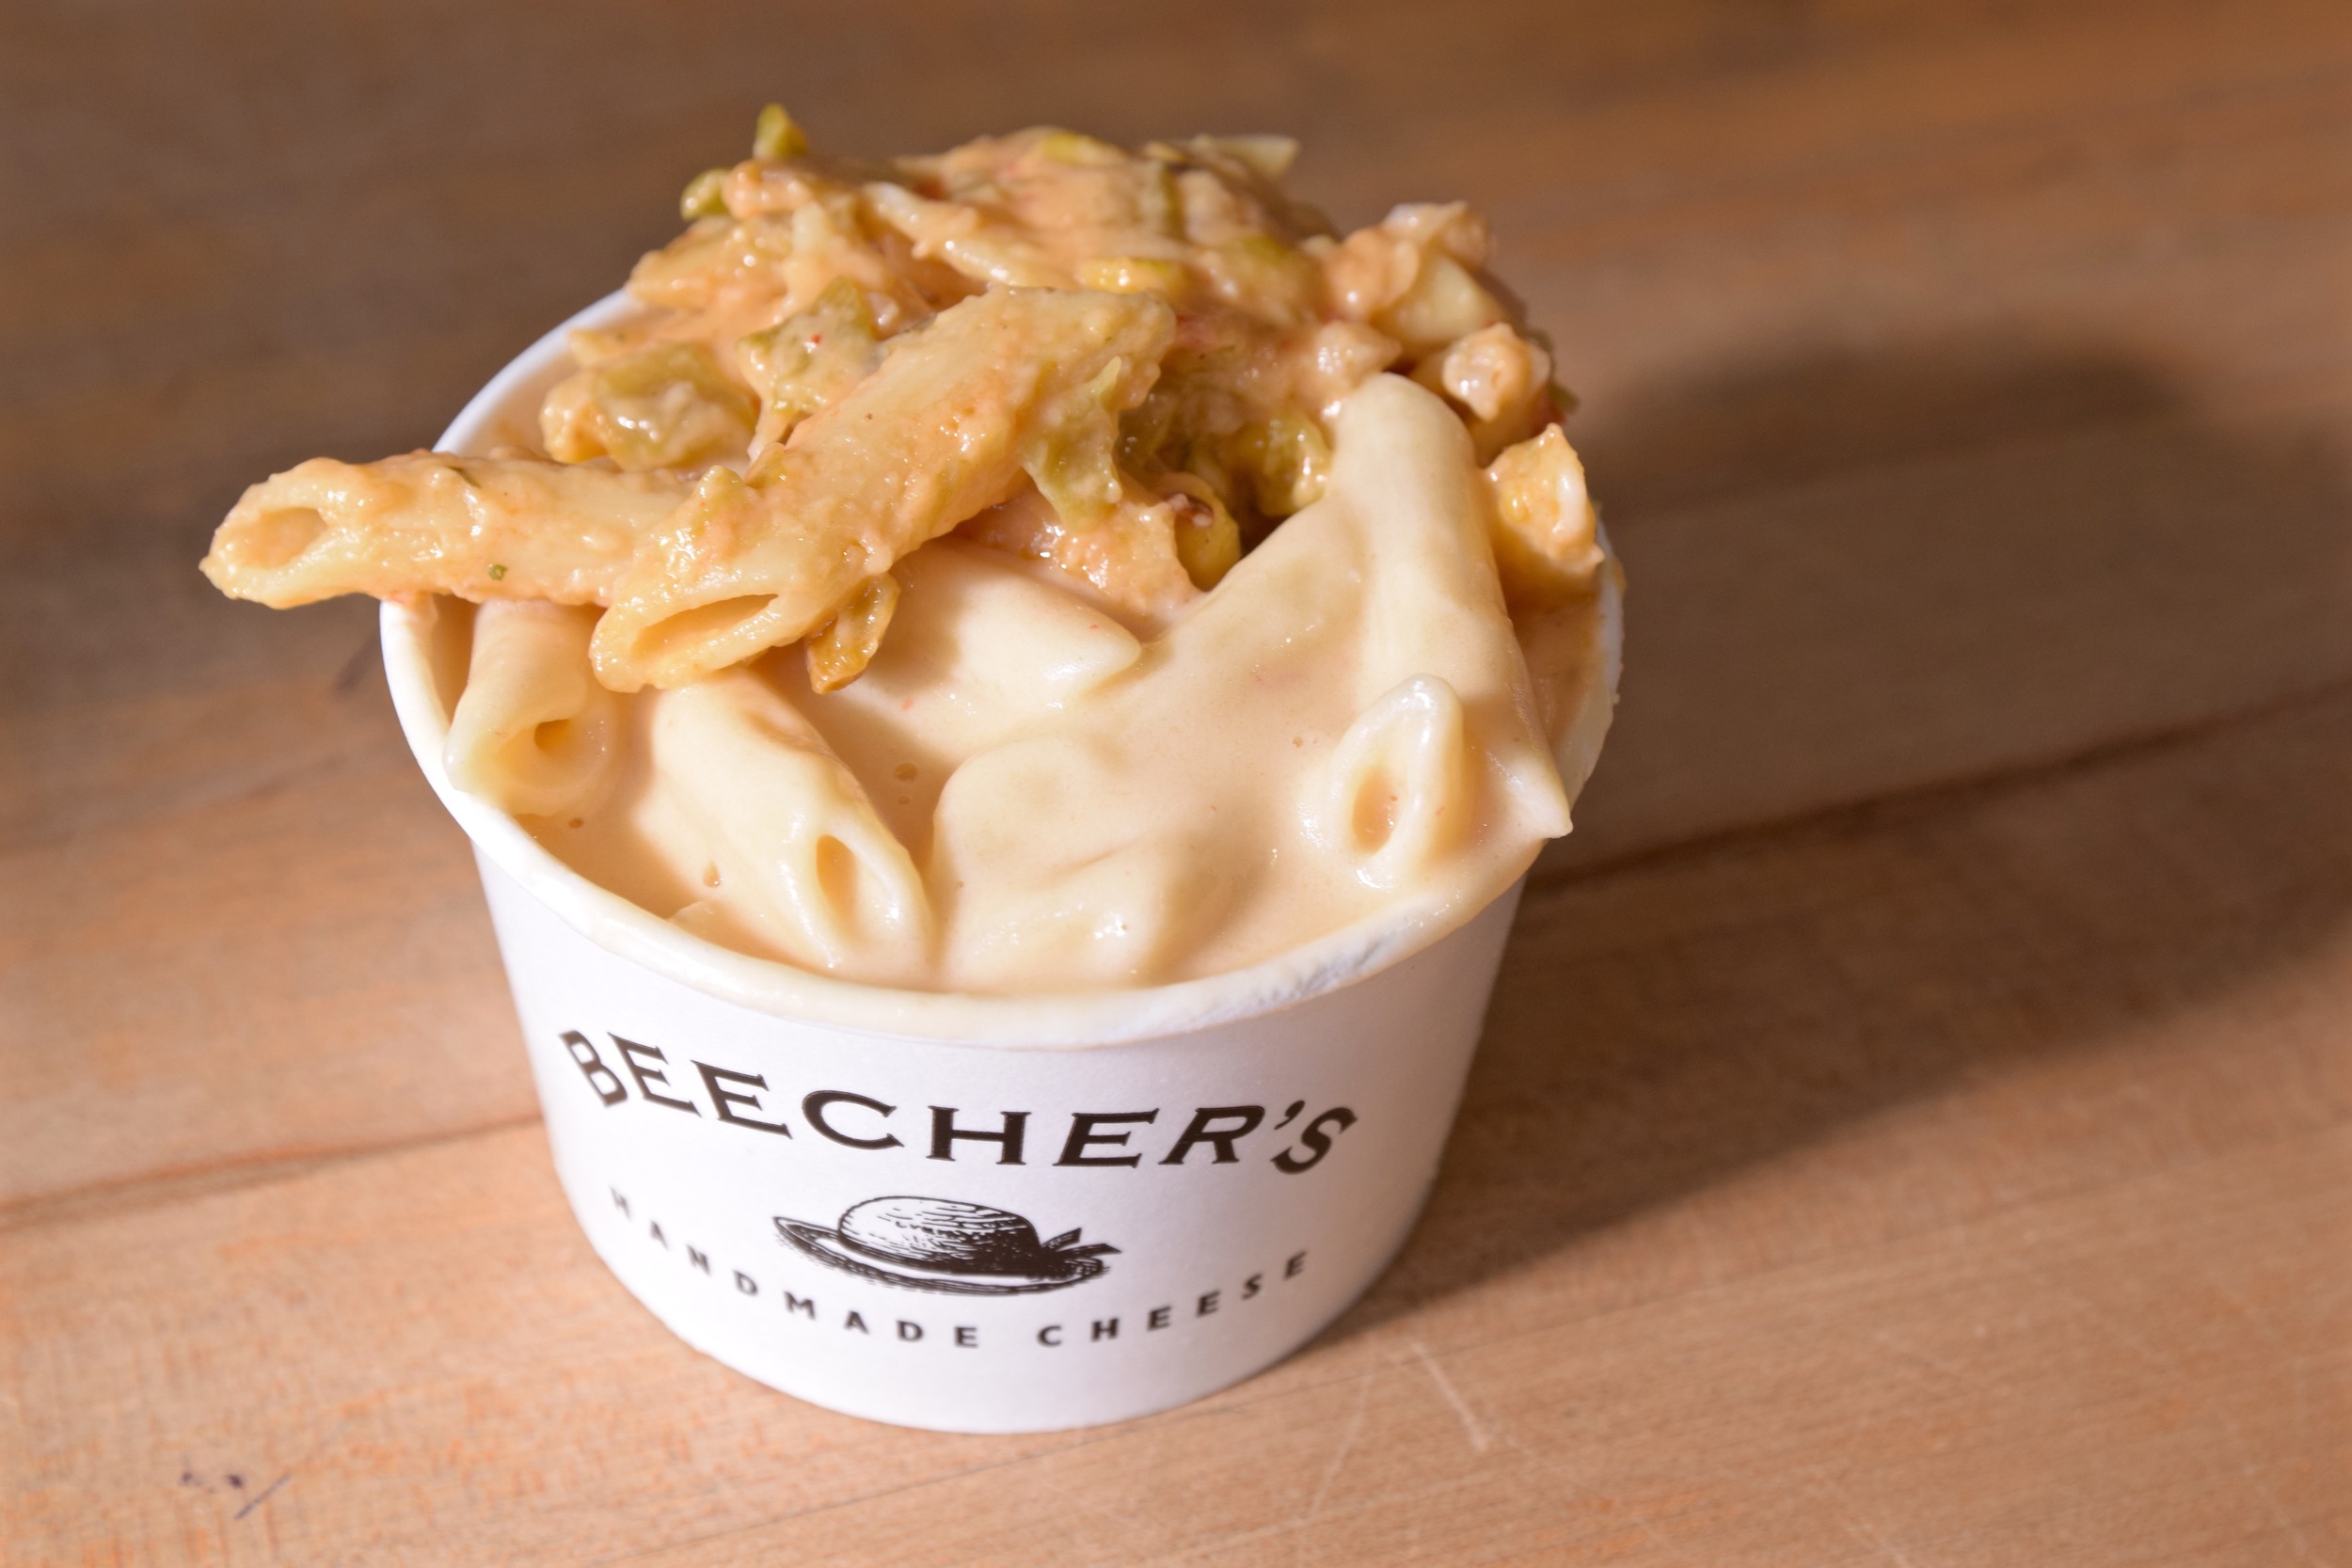 Beecher's Mac and Cheese Combo